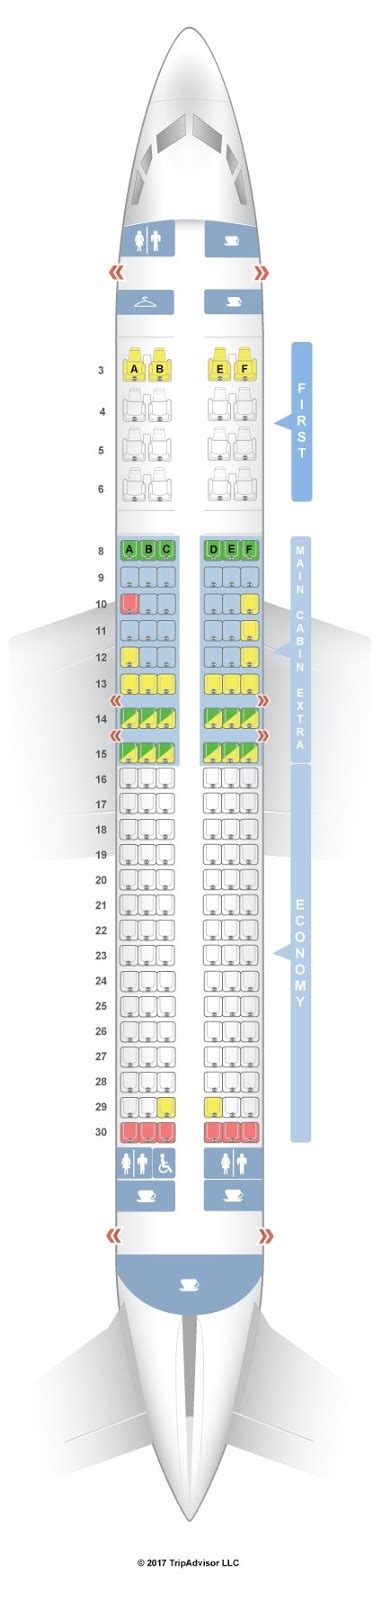 seating chart for boeing 737-800 passenger